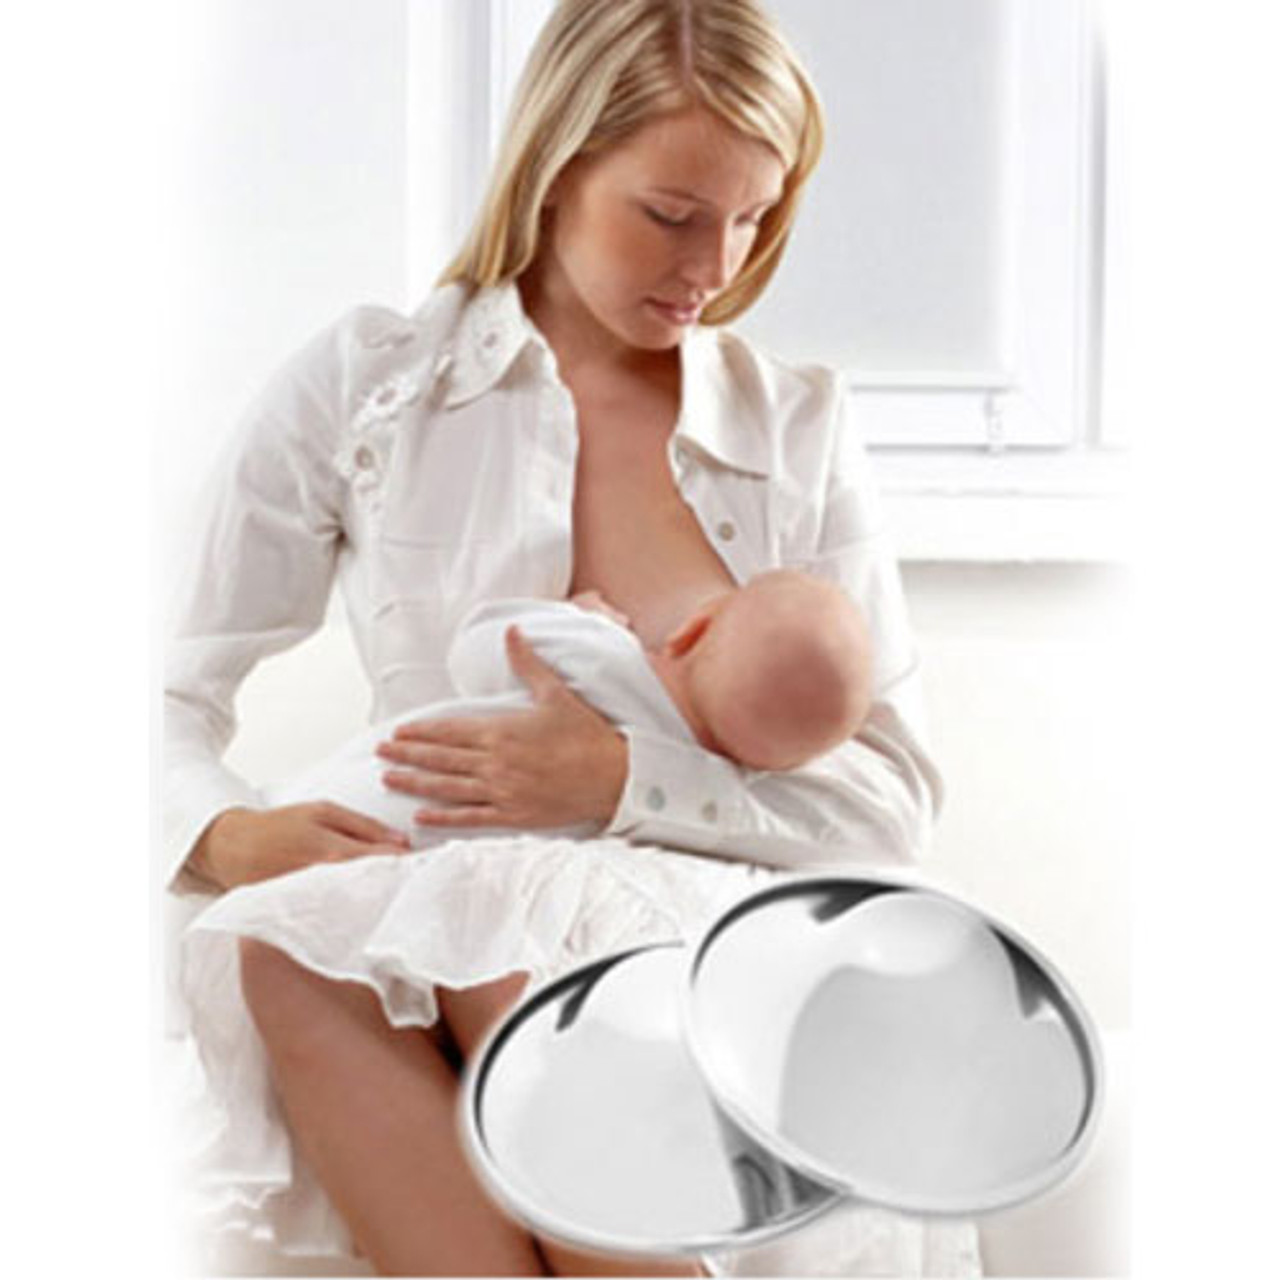 The Original Silverette Silver Nursing Cups - Sleep Tight Babies